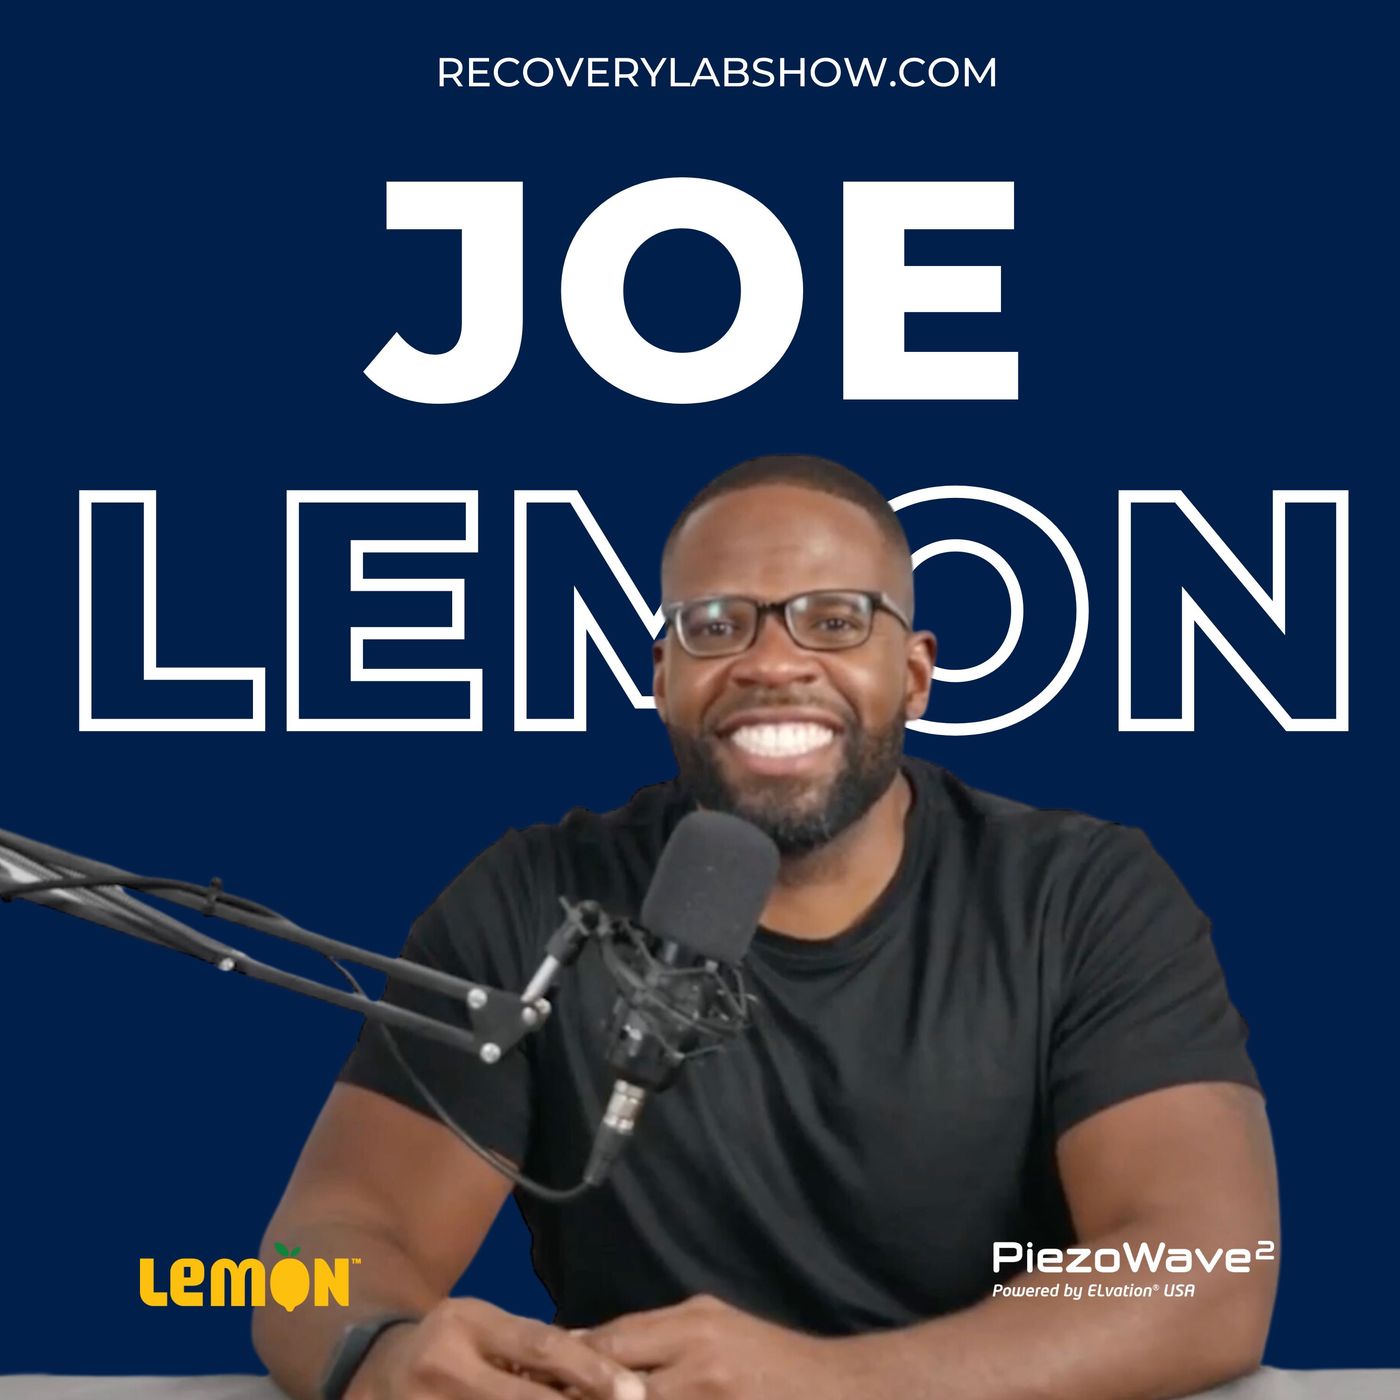 The Joe Lemon Podcast podcast show image